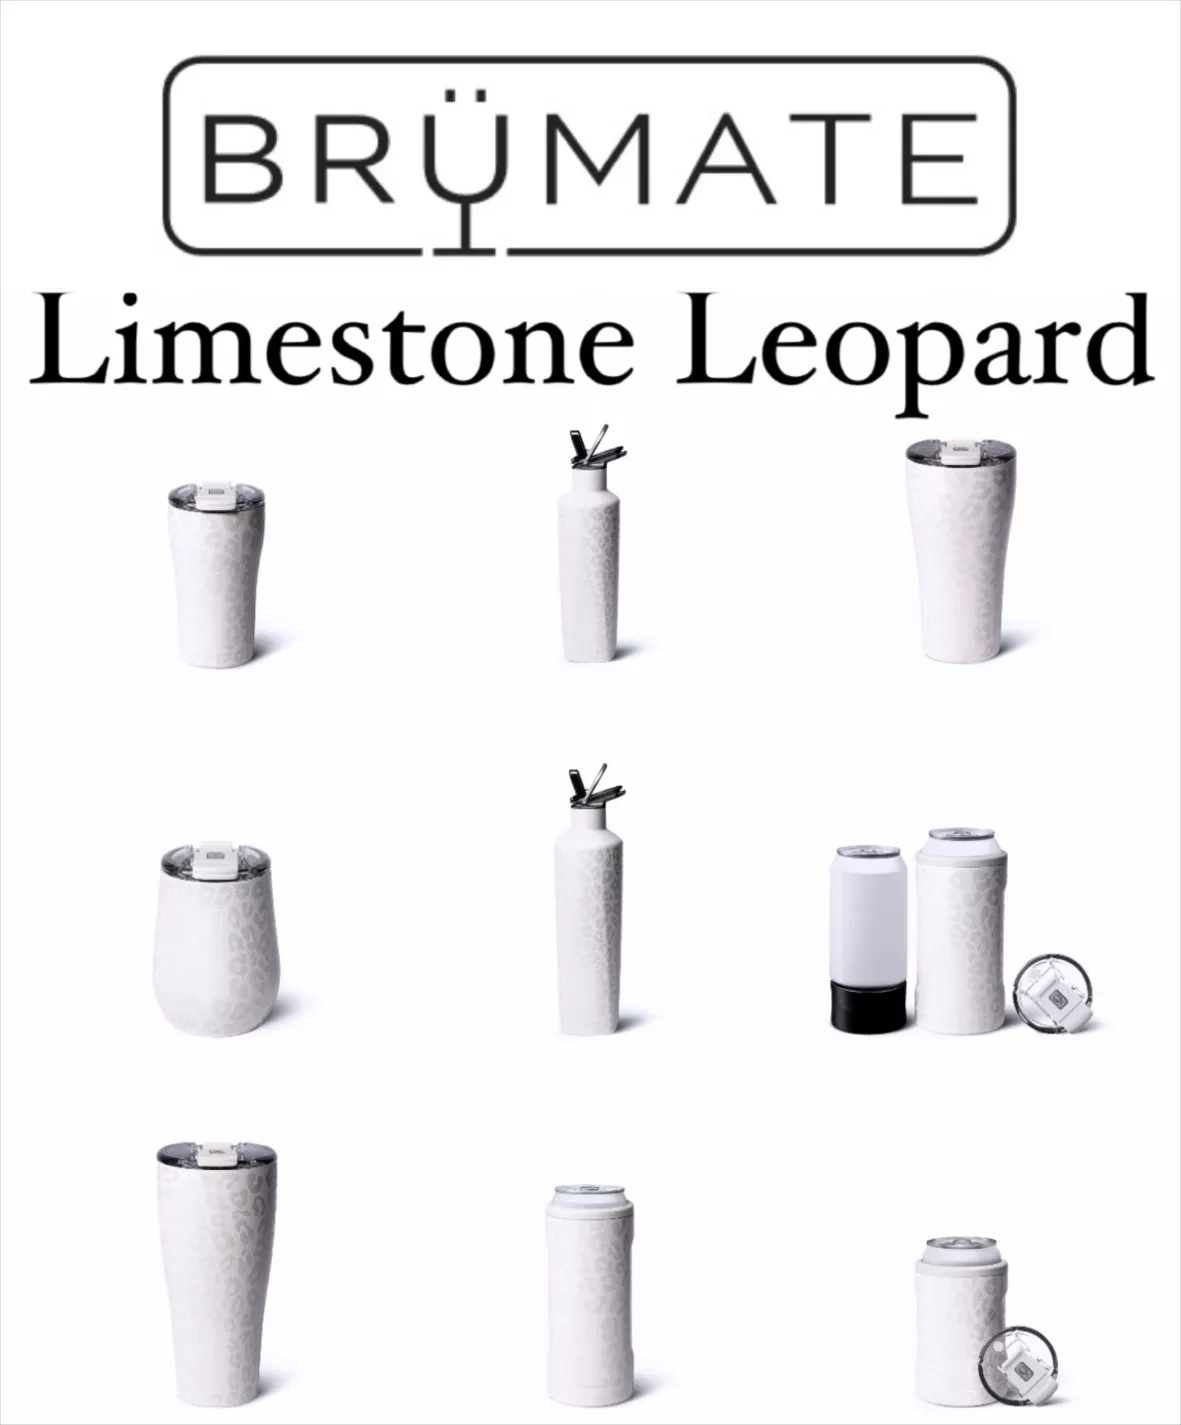 Era 40oz Tumbler in Limestone Leopard by Brumate